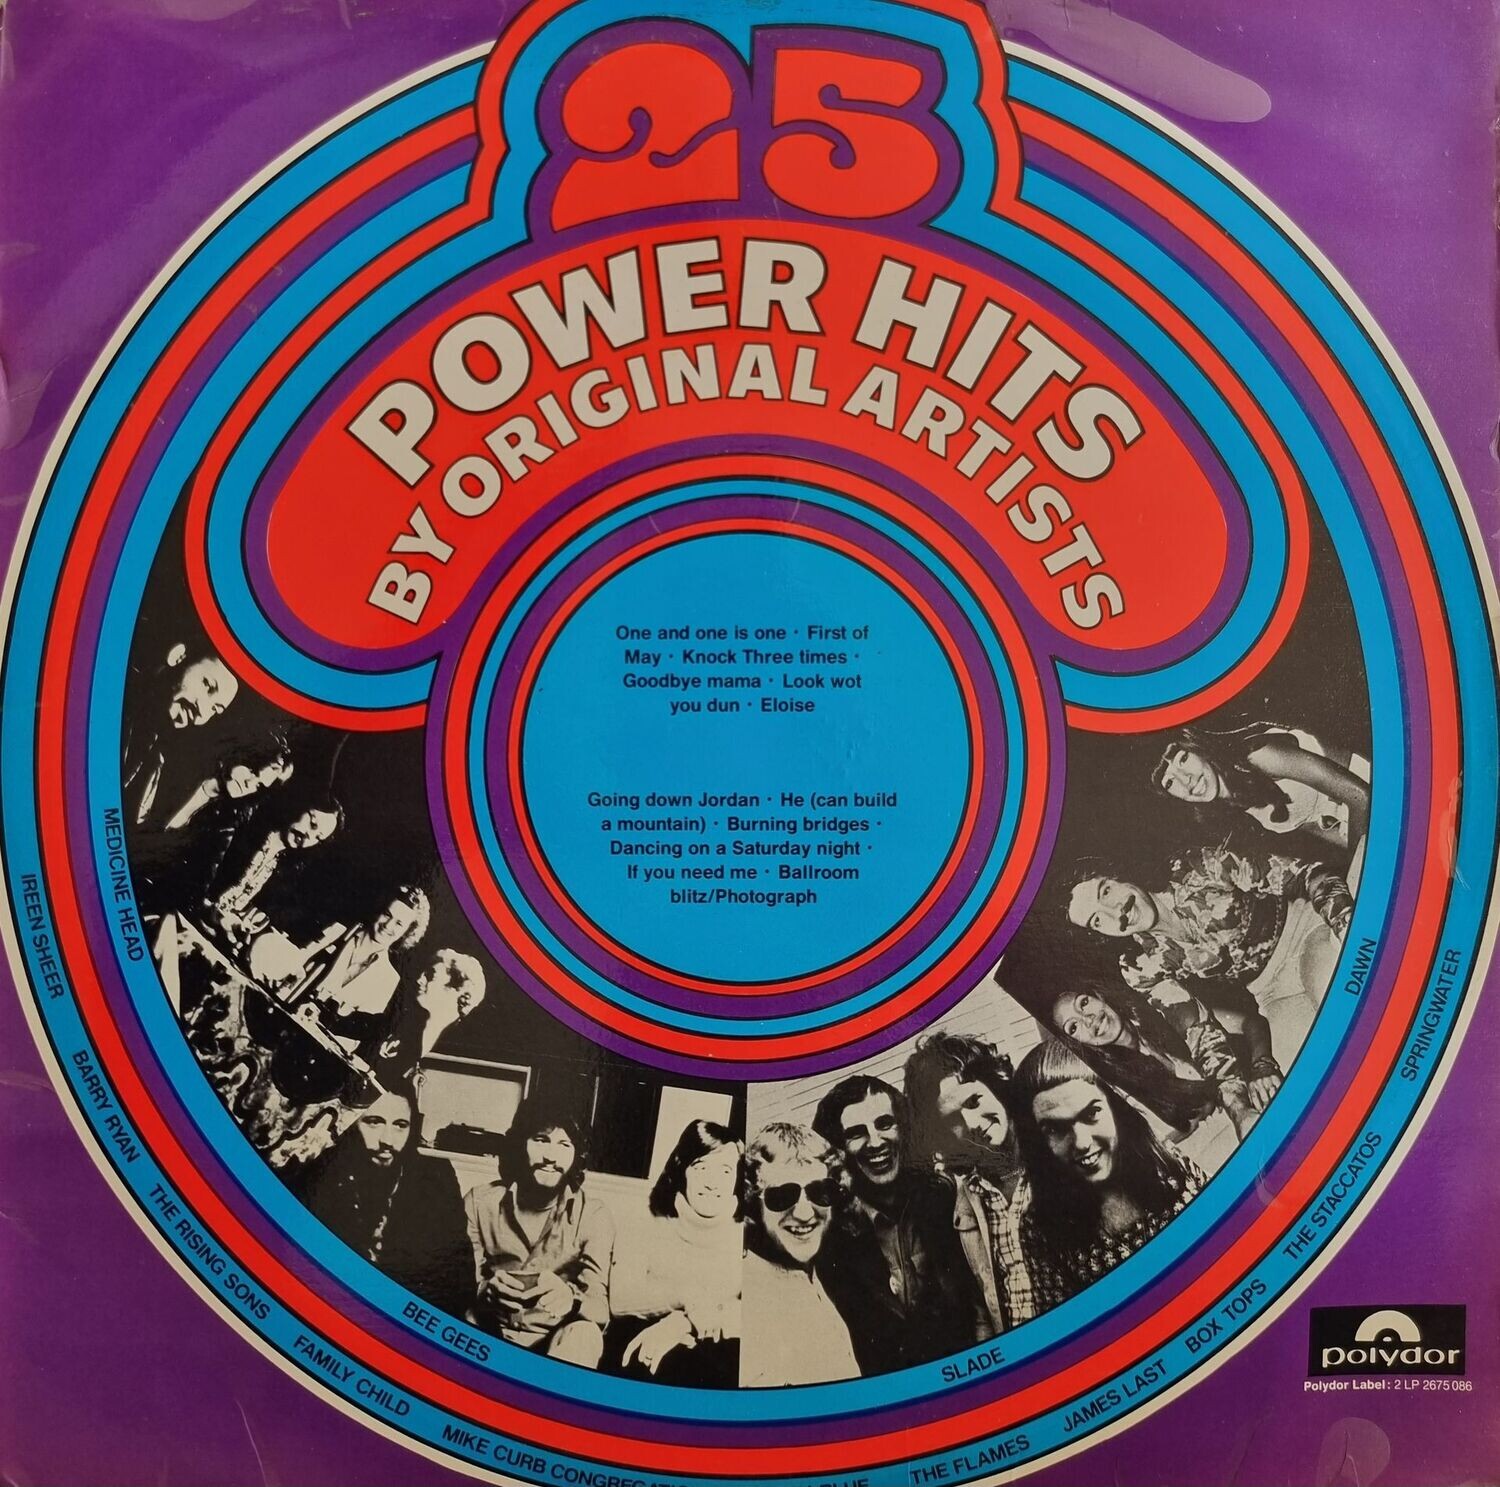 Various – 25 Power Hits By Original Artists (1974) [2 x LP]